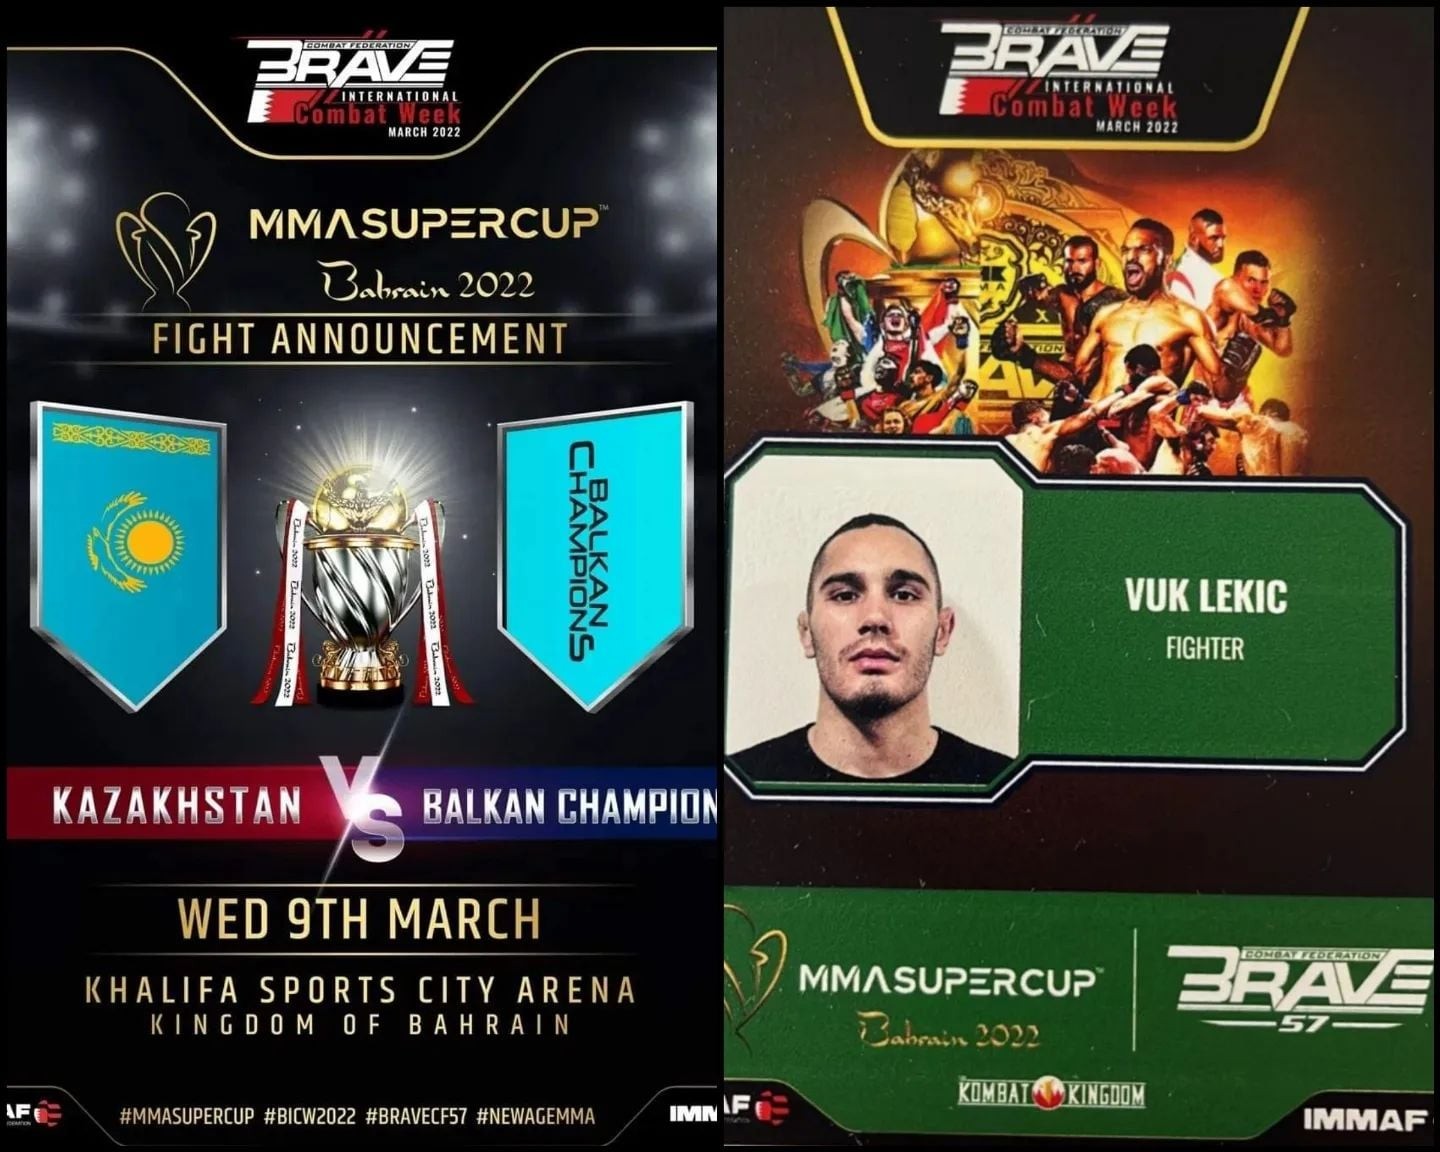 MMA Super Cup 2022 cover image